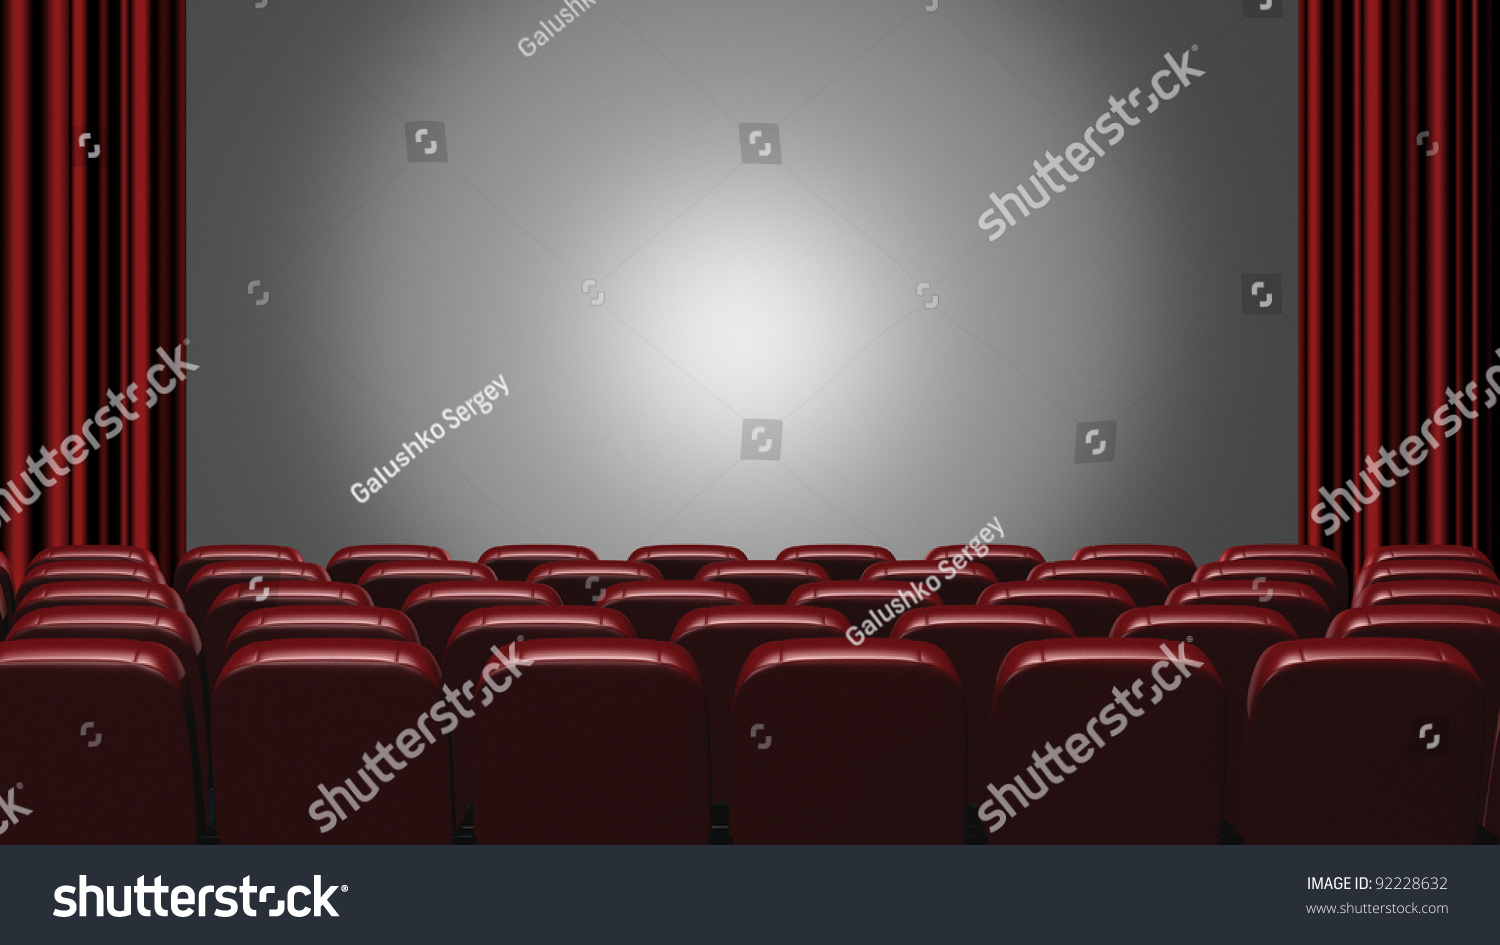 Cinema Auditorium 3d Rendering View On Stock Photo 92228632 - Shutterstock